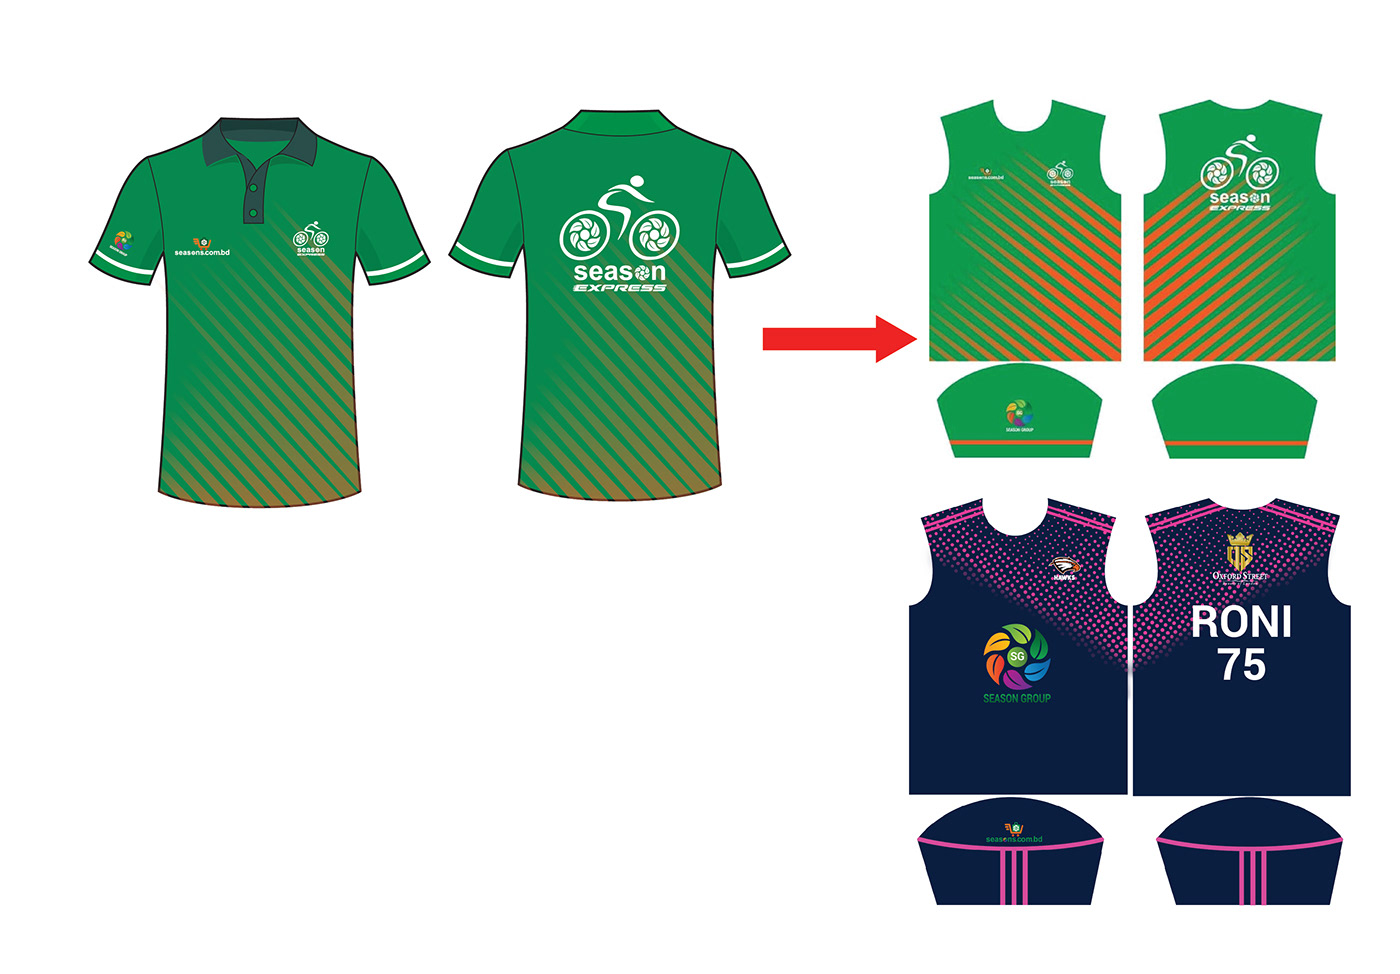 jersey Jersey Design jersey design cricket jersey design new Rezuanul islam roni roni update design soccer jersey design